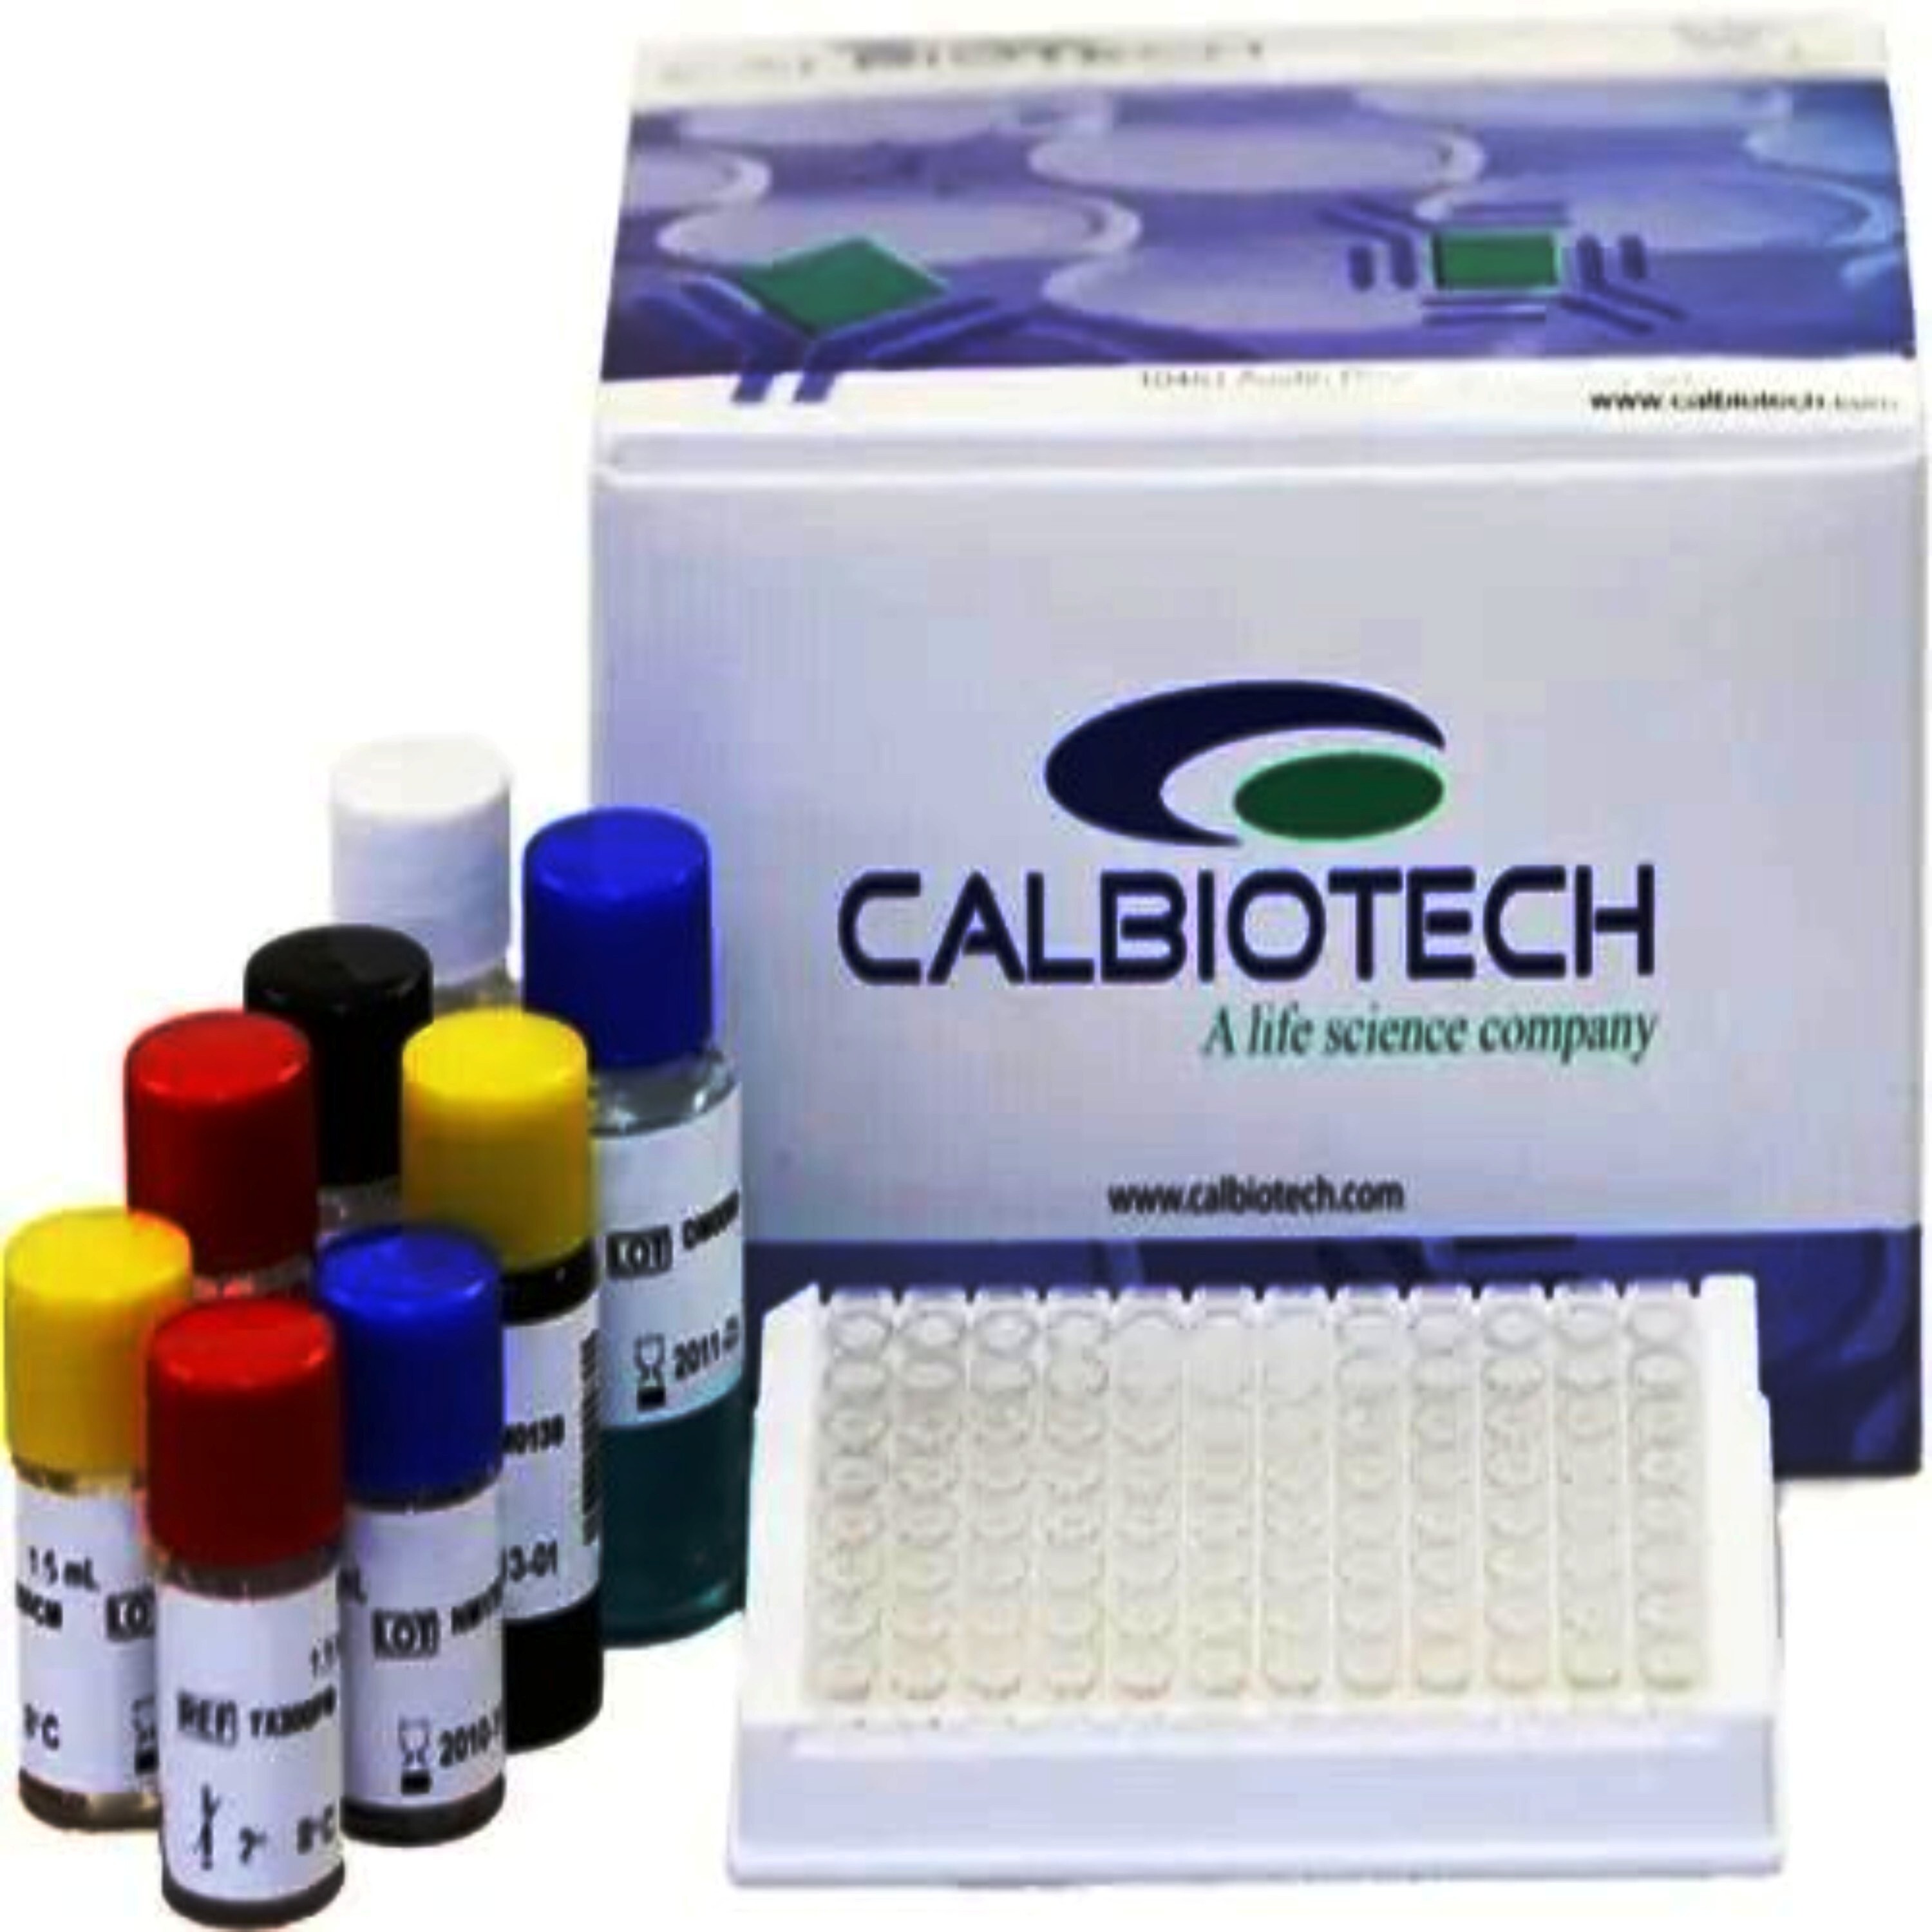 Calbiotech AFP Elisa Kit